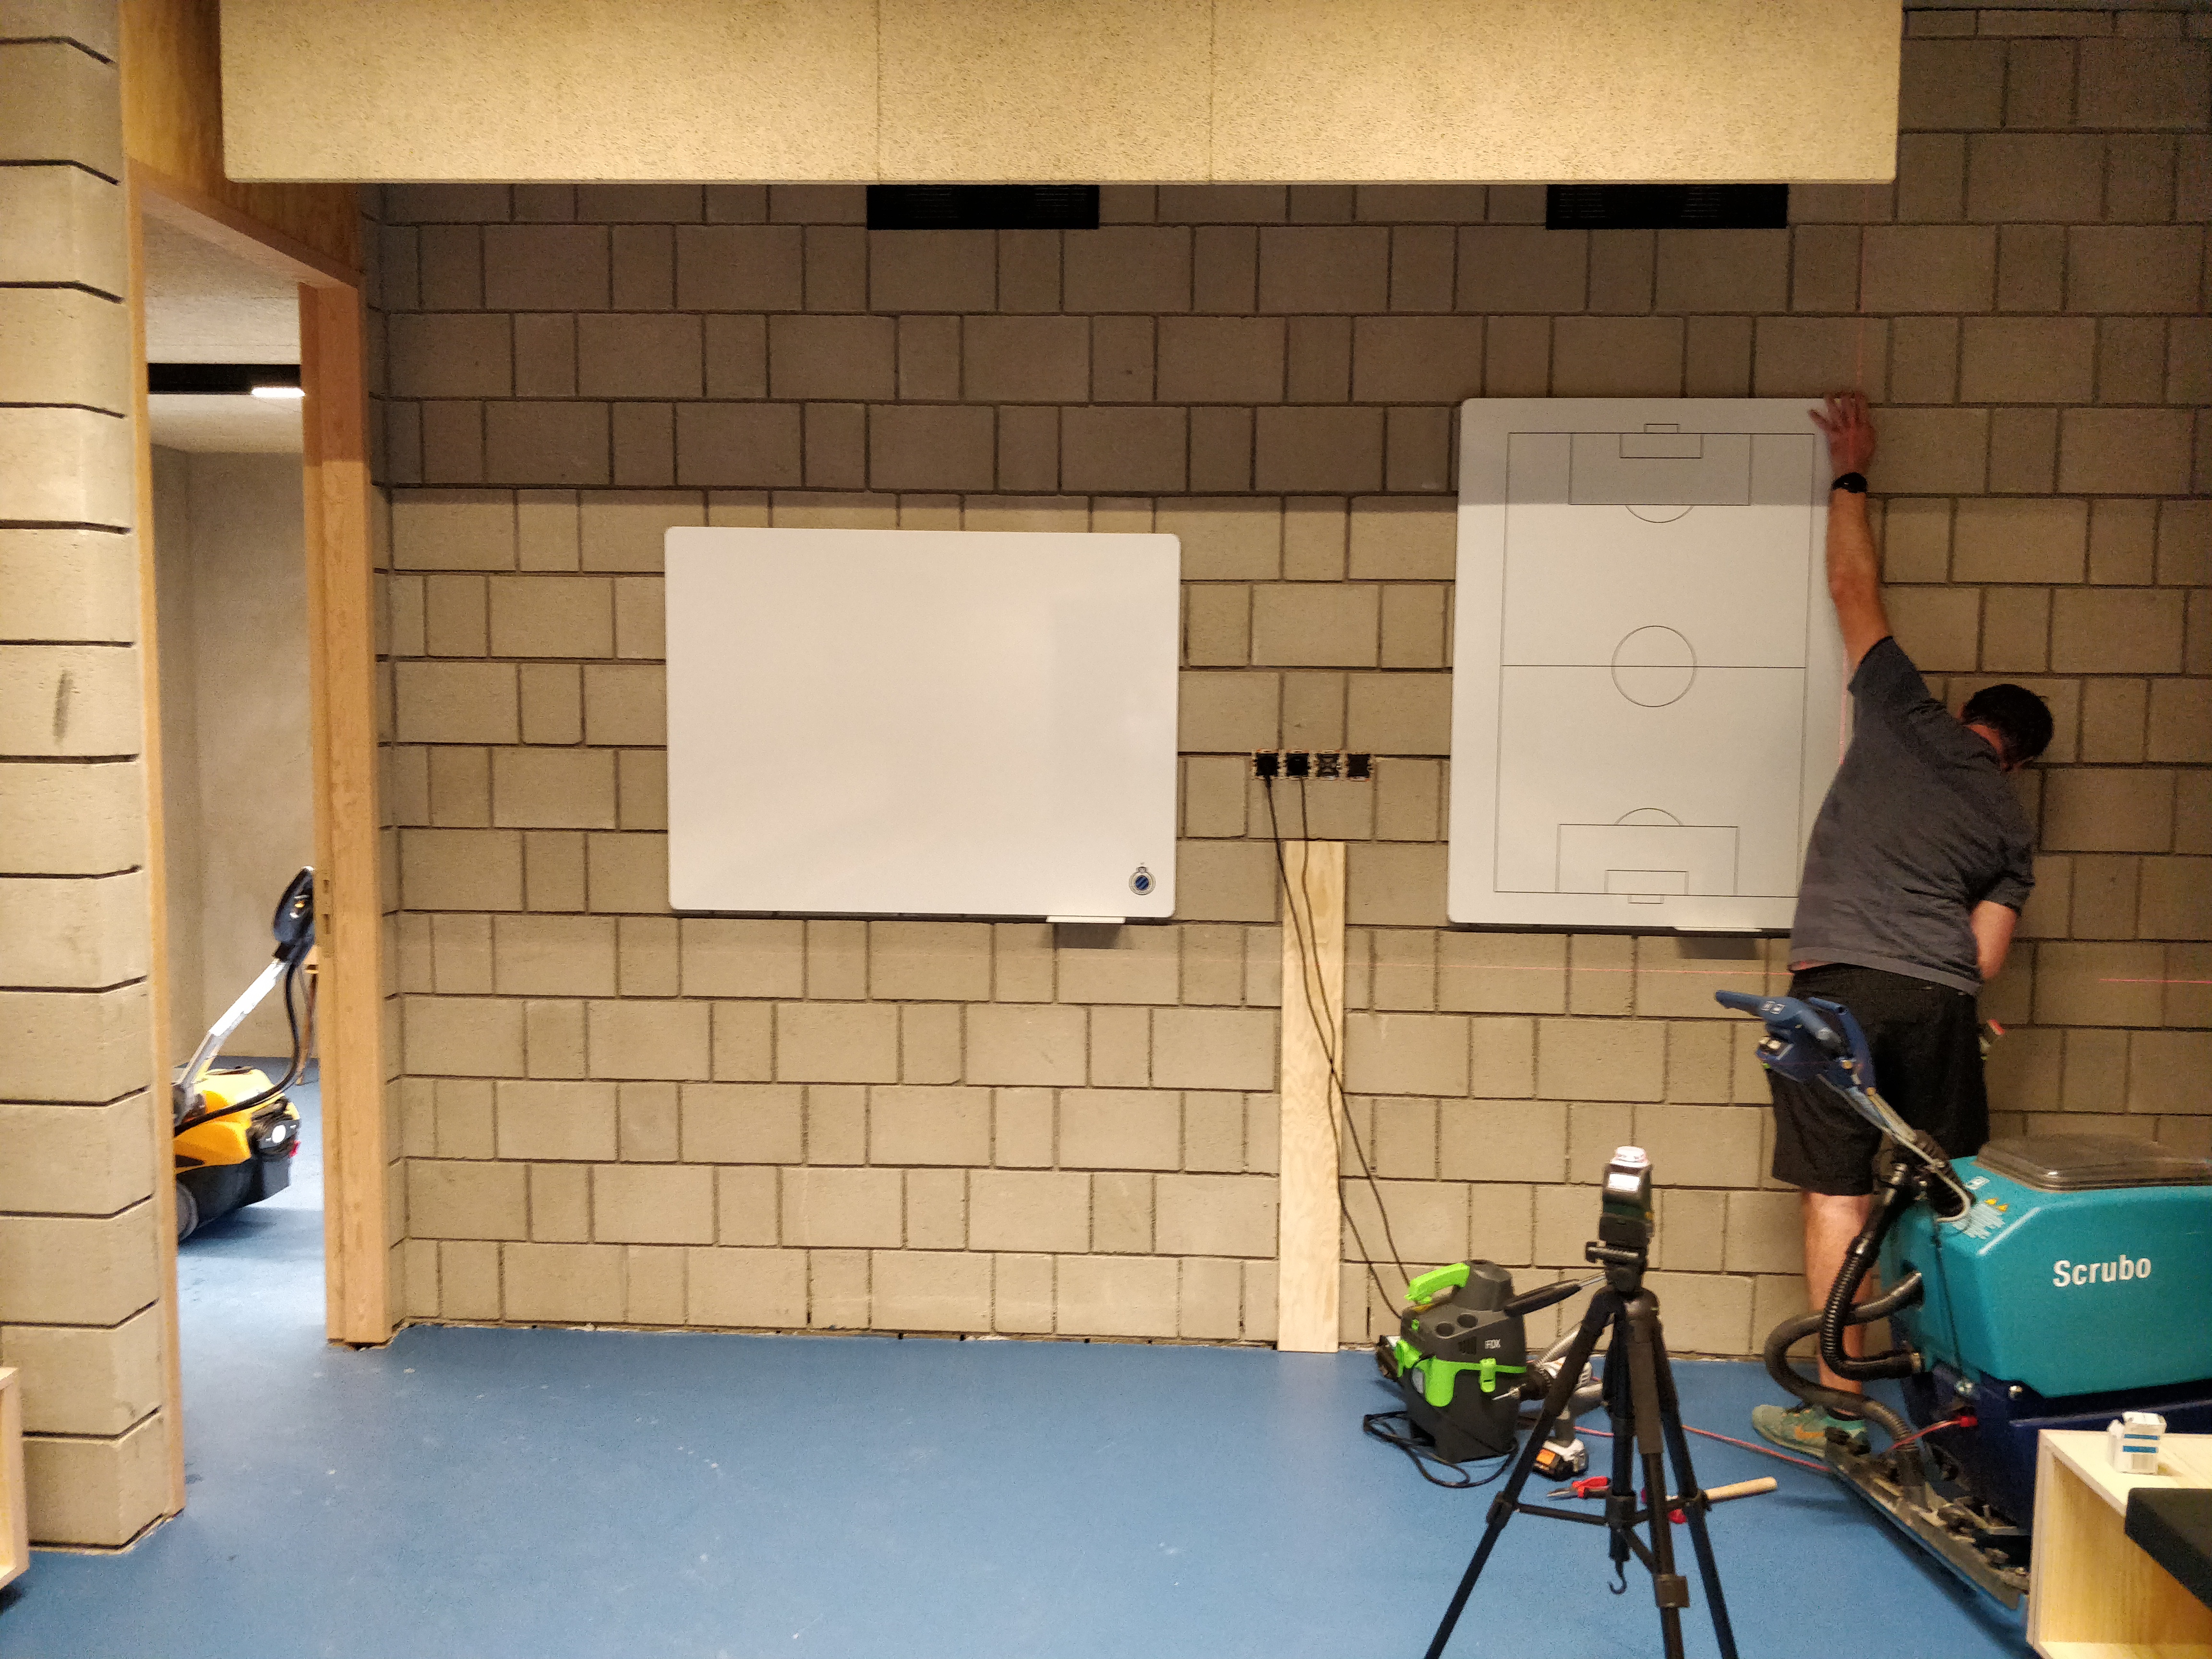 Club Brugge - Marcelis Smart Office - Legamaster tactical voetbelveld whiteboard met logo - Belgie - Vlaams brabant